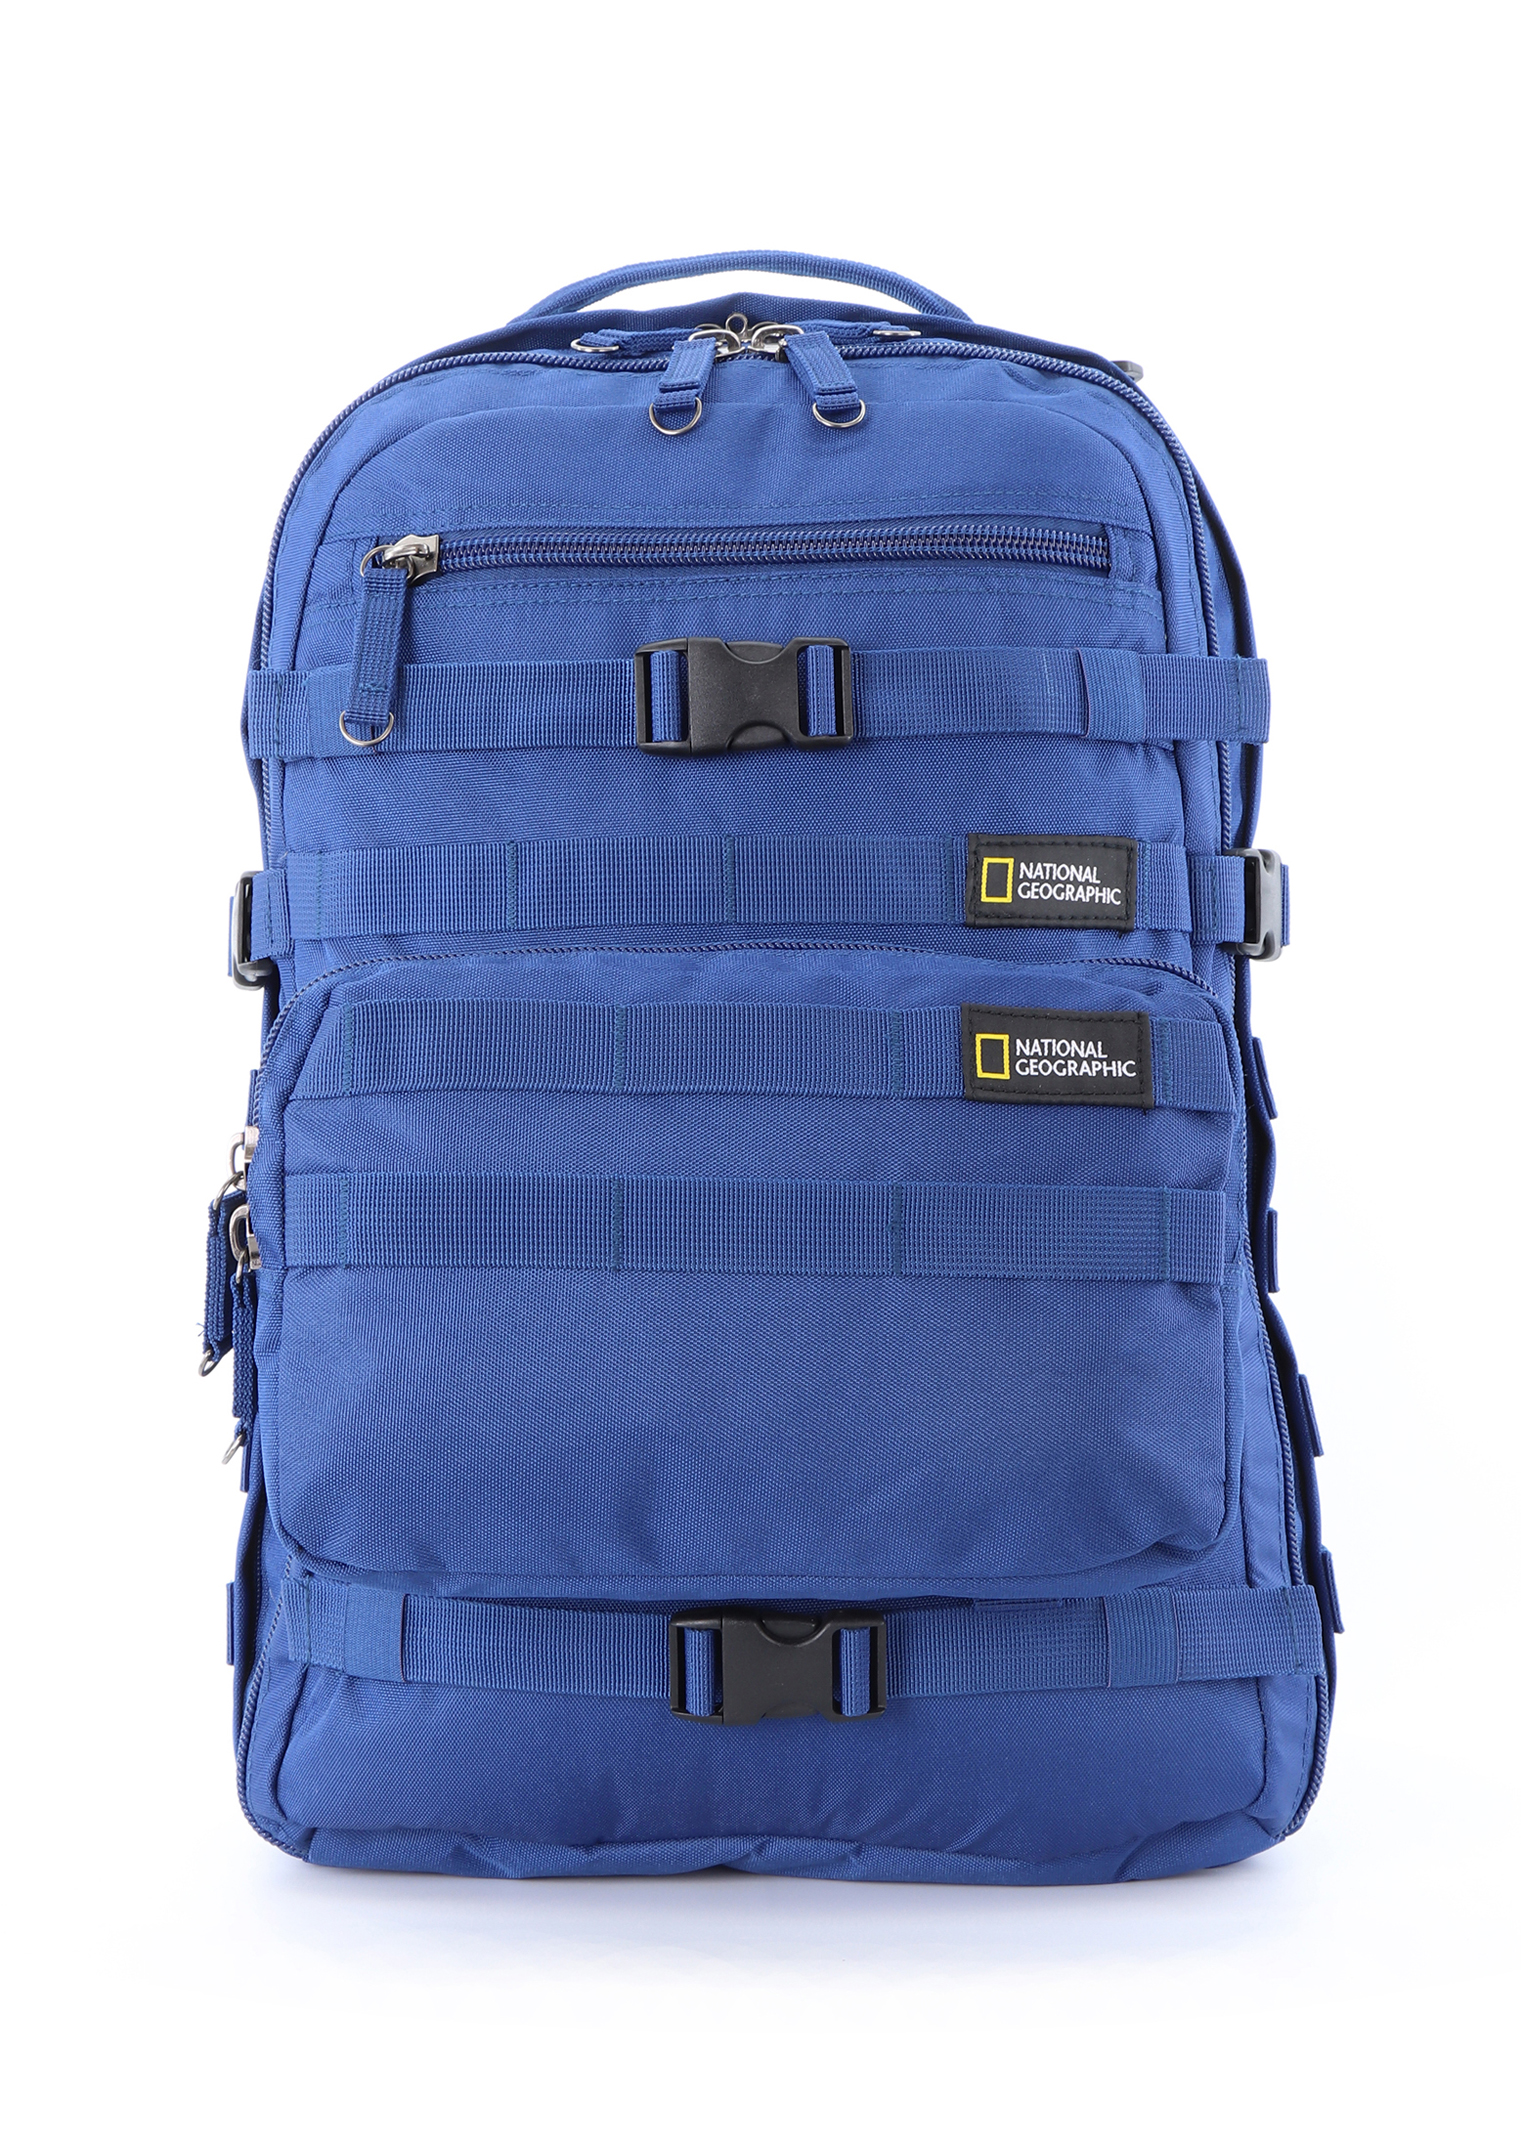 Рюкзак National Geographic Rocket, синий